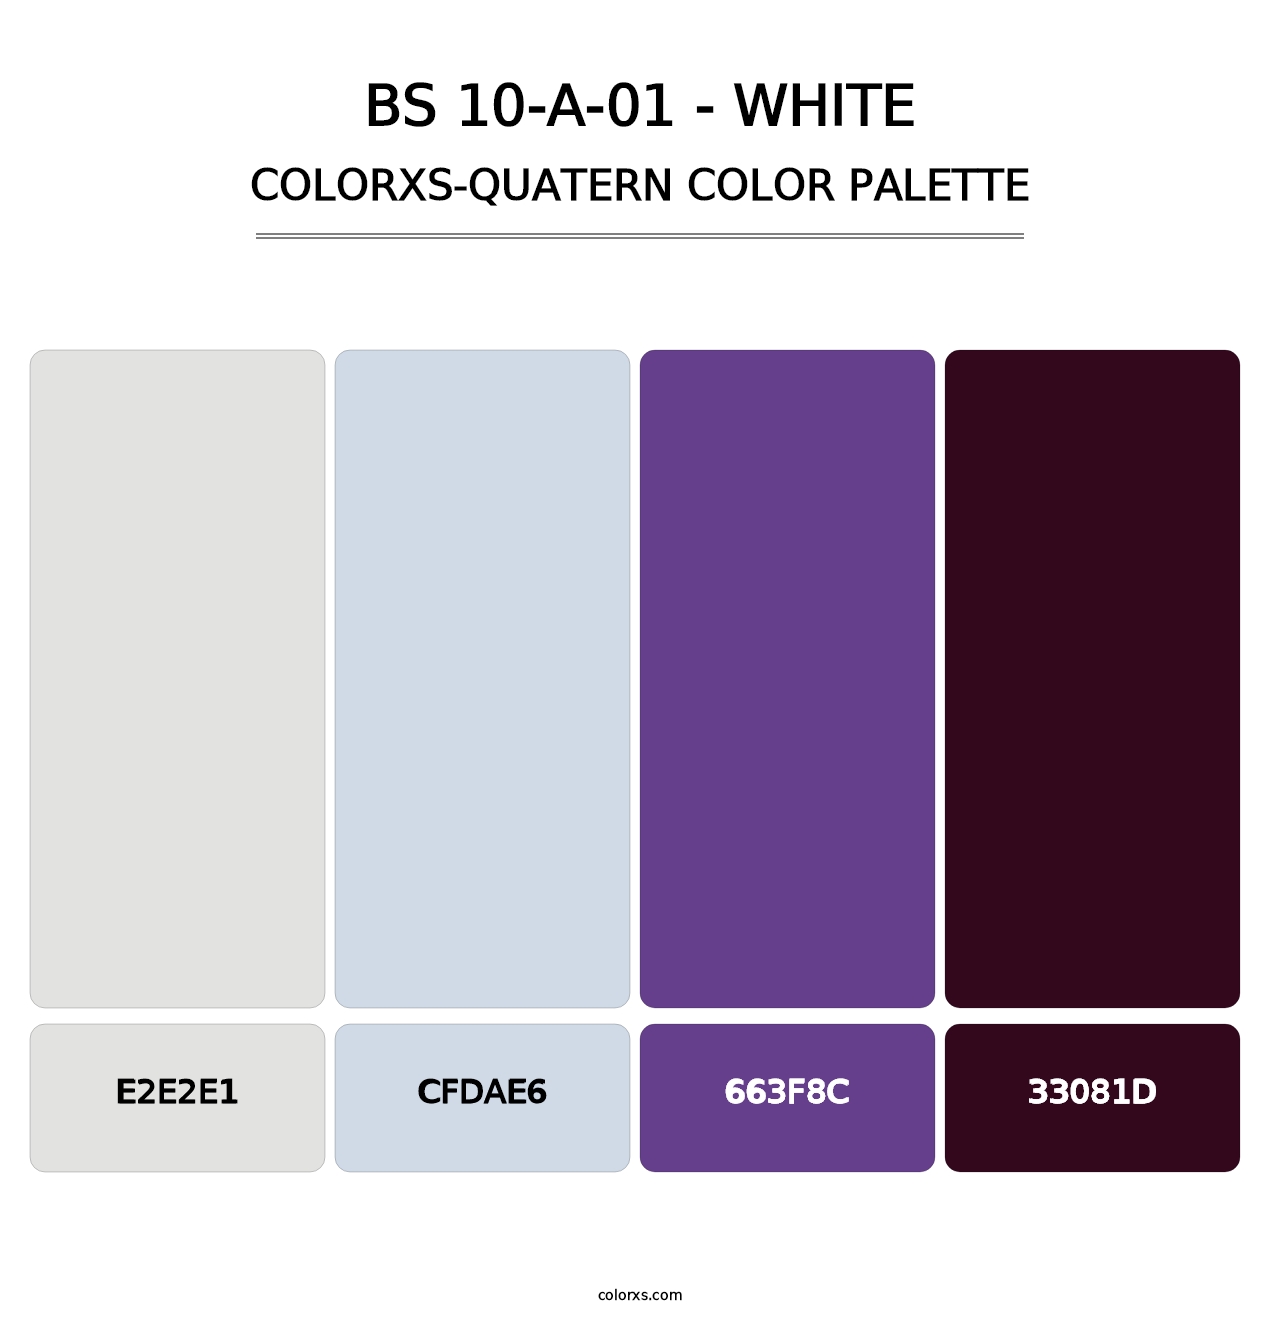 BS 10-A-01 - White - Colorxs Quatern Palette